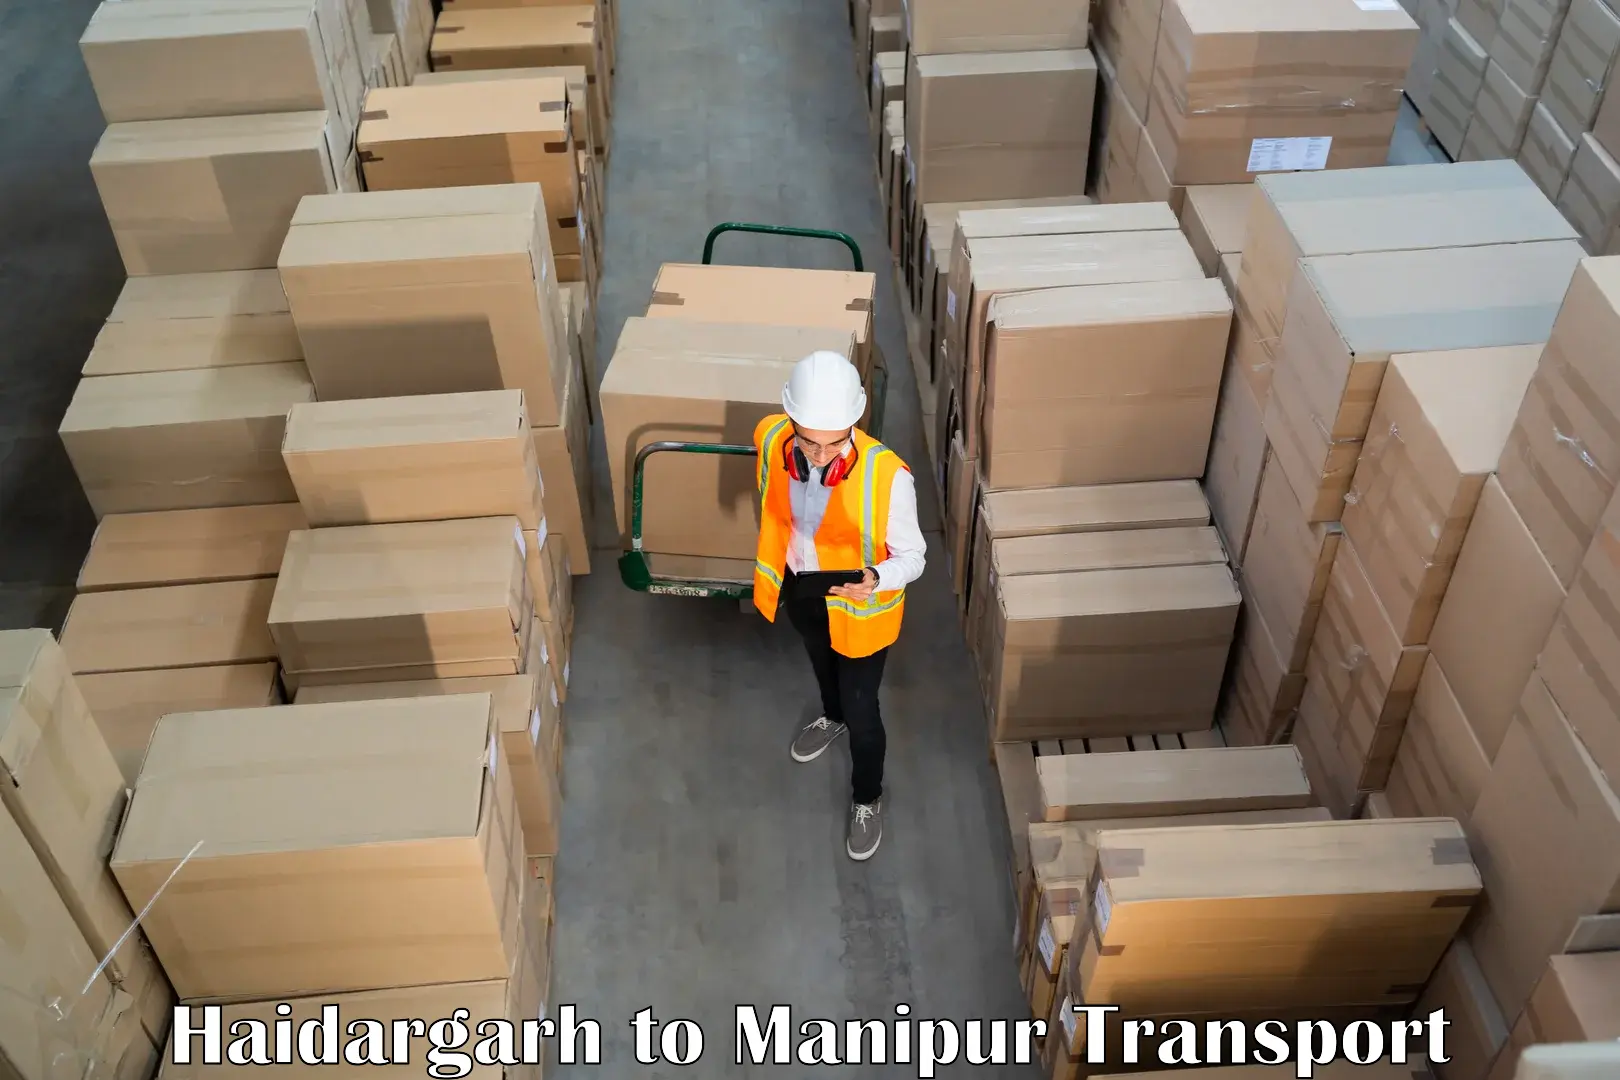 Online transport service Haidargarh to Senapati